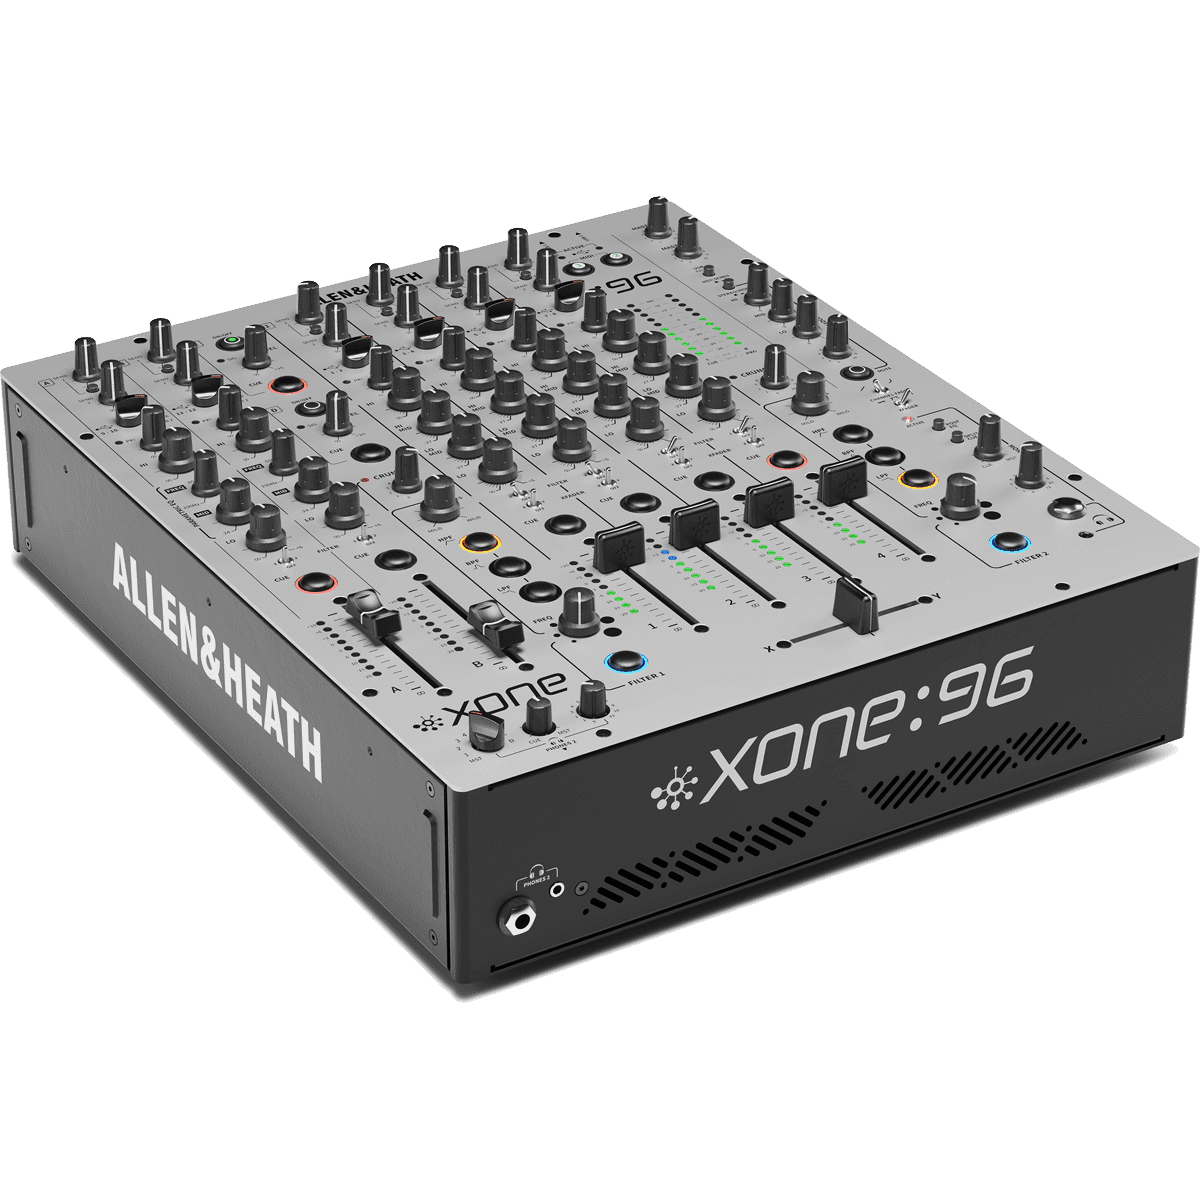 Tables de mixage DJ - Allen & Heath - XONE 96